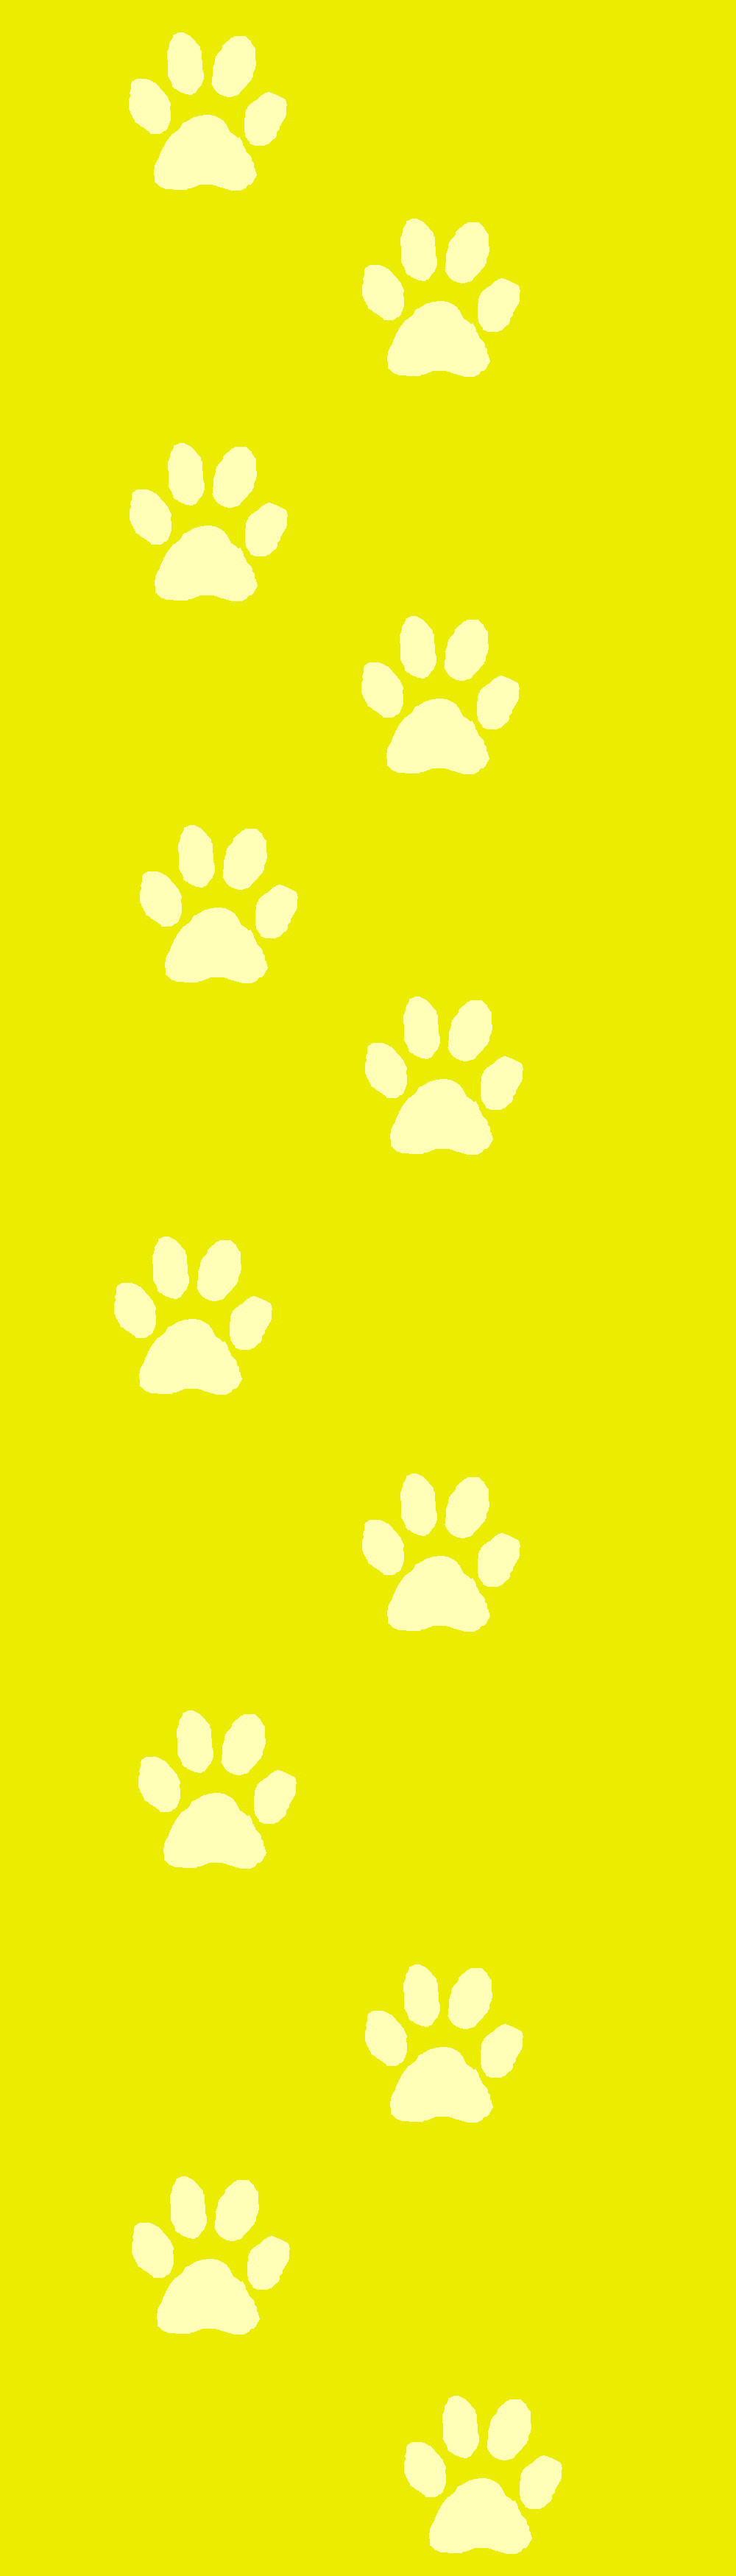 Yellow Dog Paw Print Custom Box Background By Kawaii 0kami On